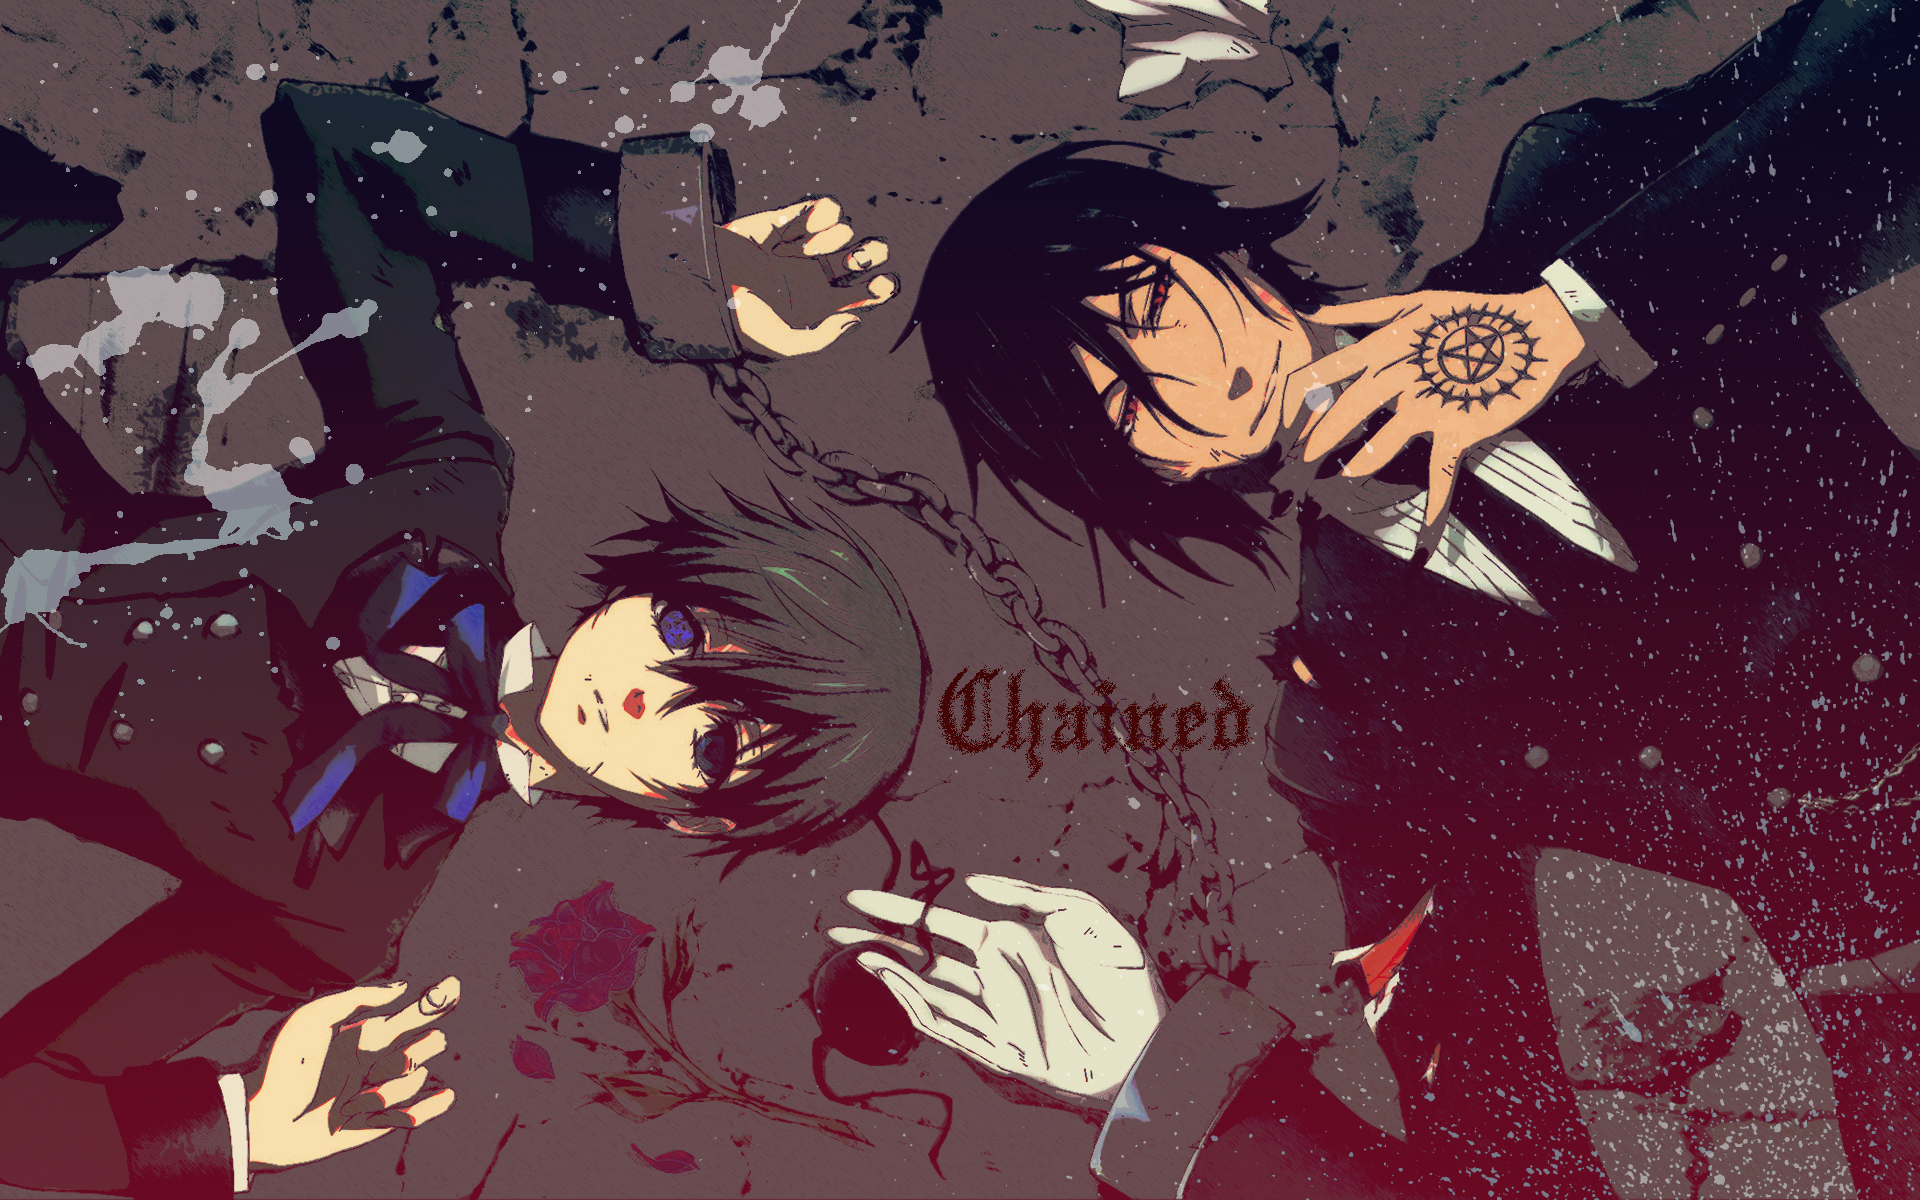 Sebastian Michaelis and Ciel Phantomhive from the anime Black Butler.